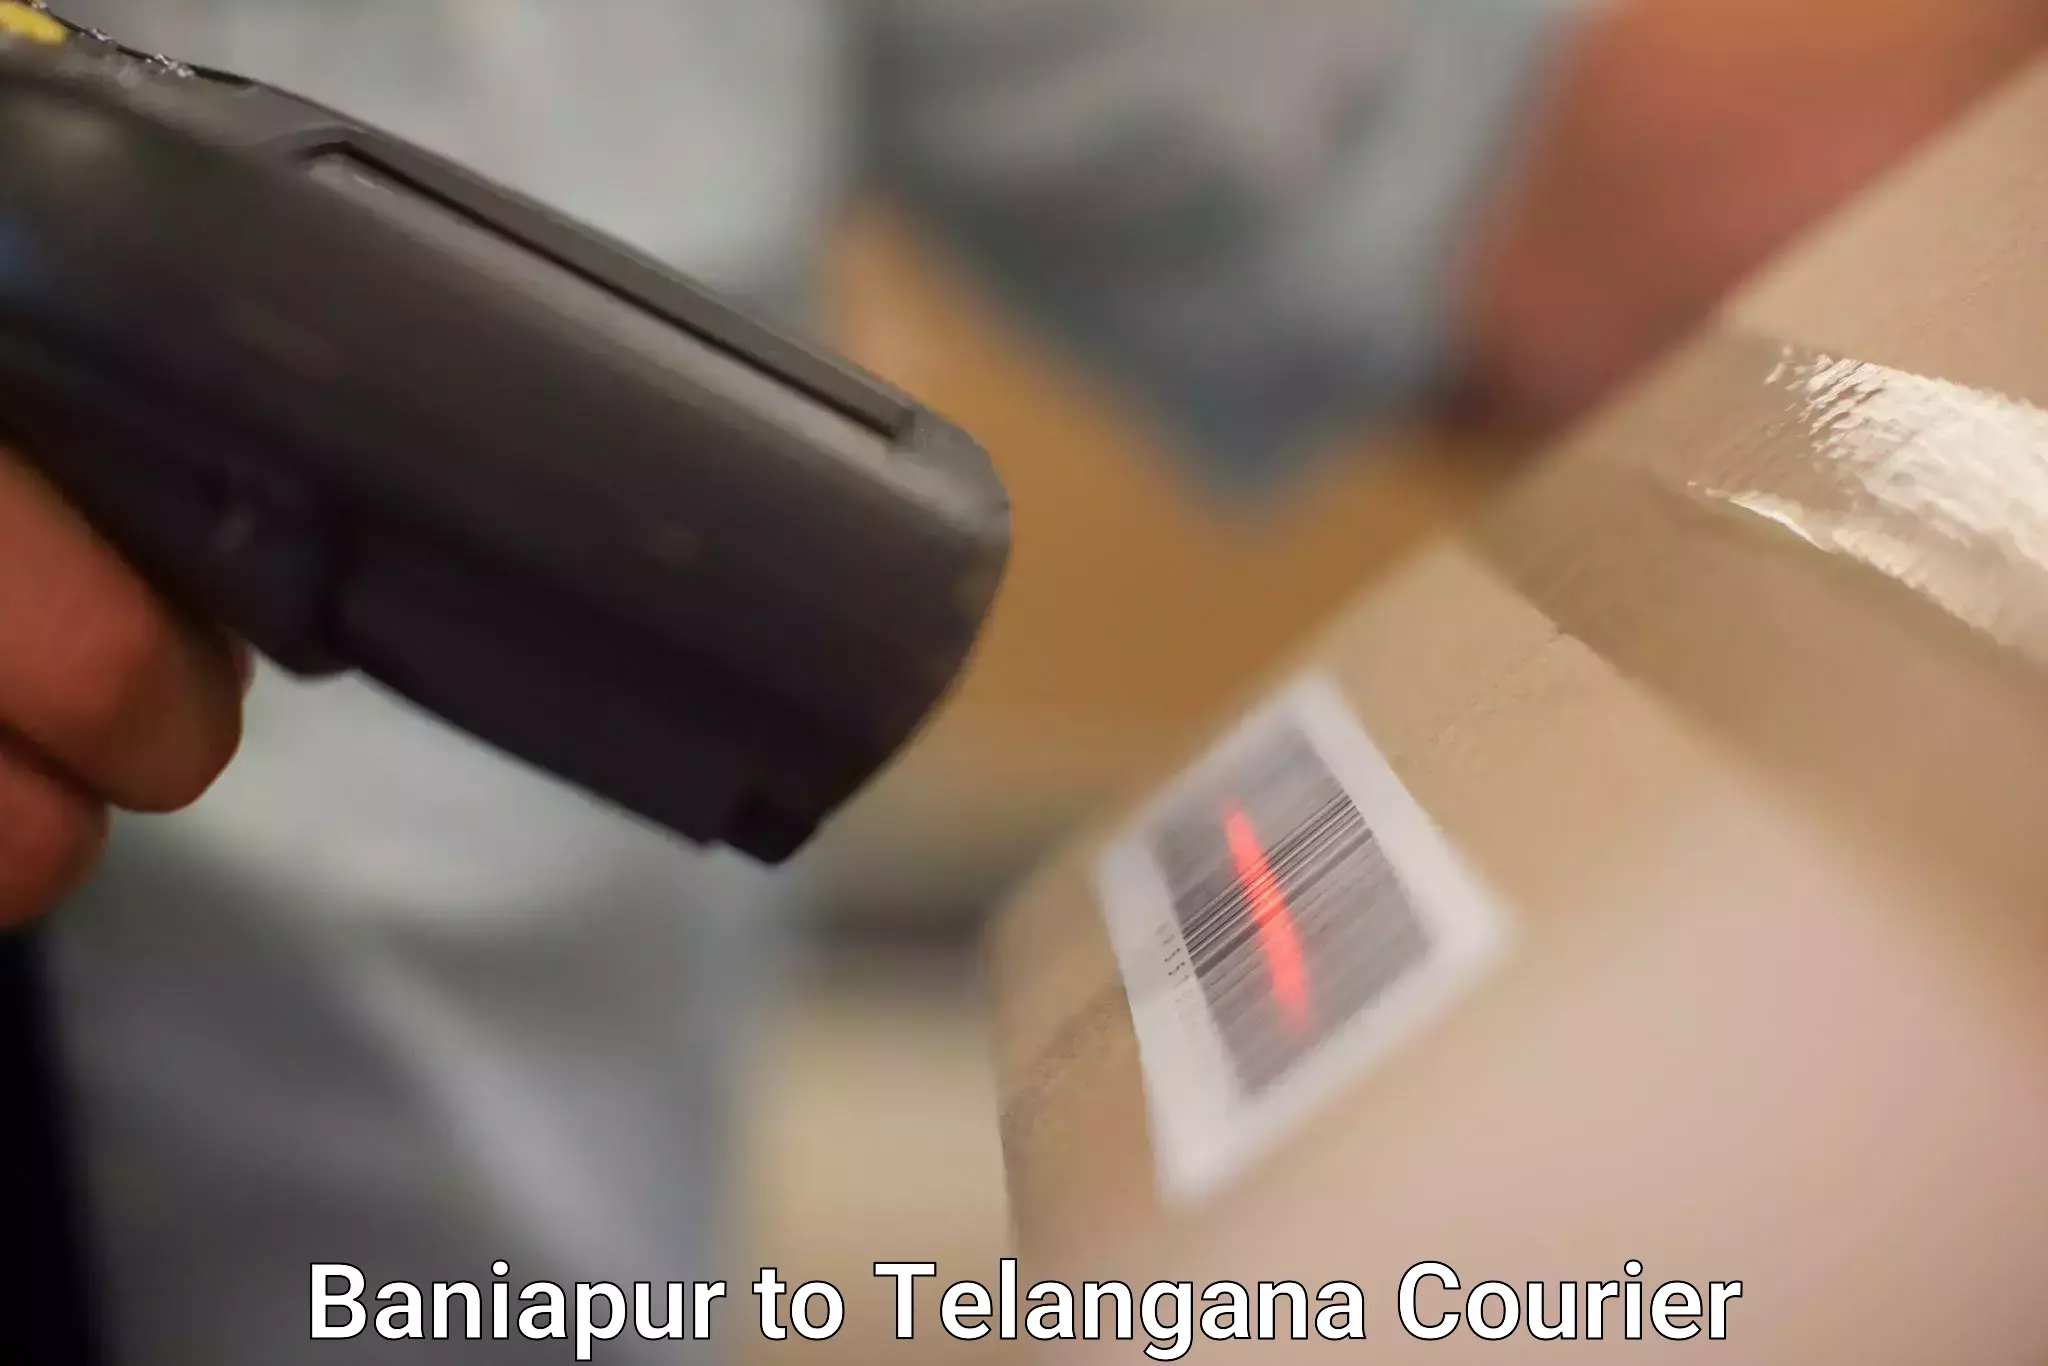 Courier service comparison Baniapur to Allapalli